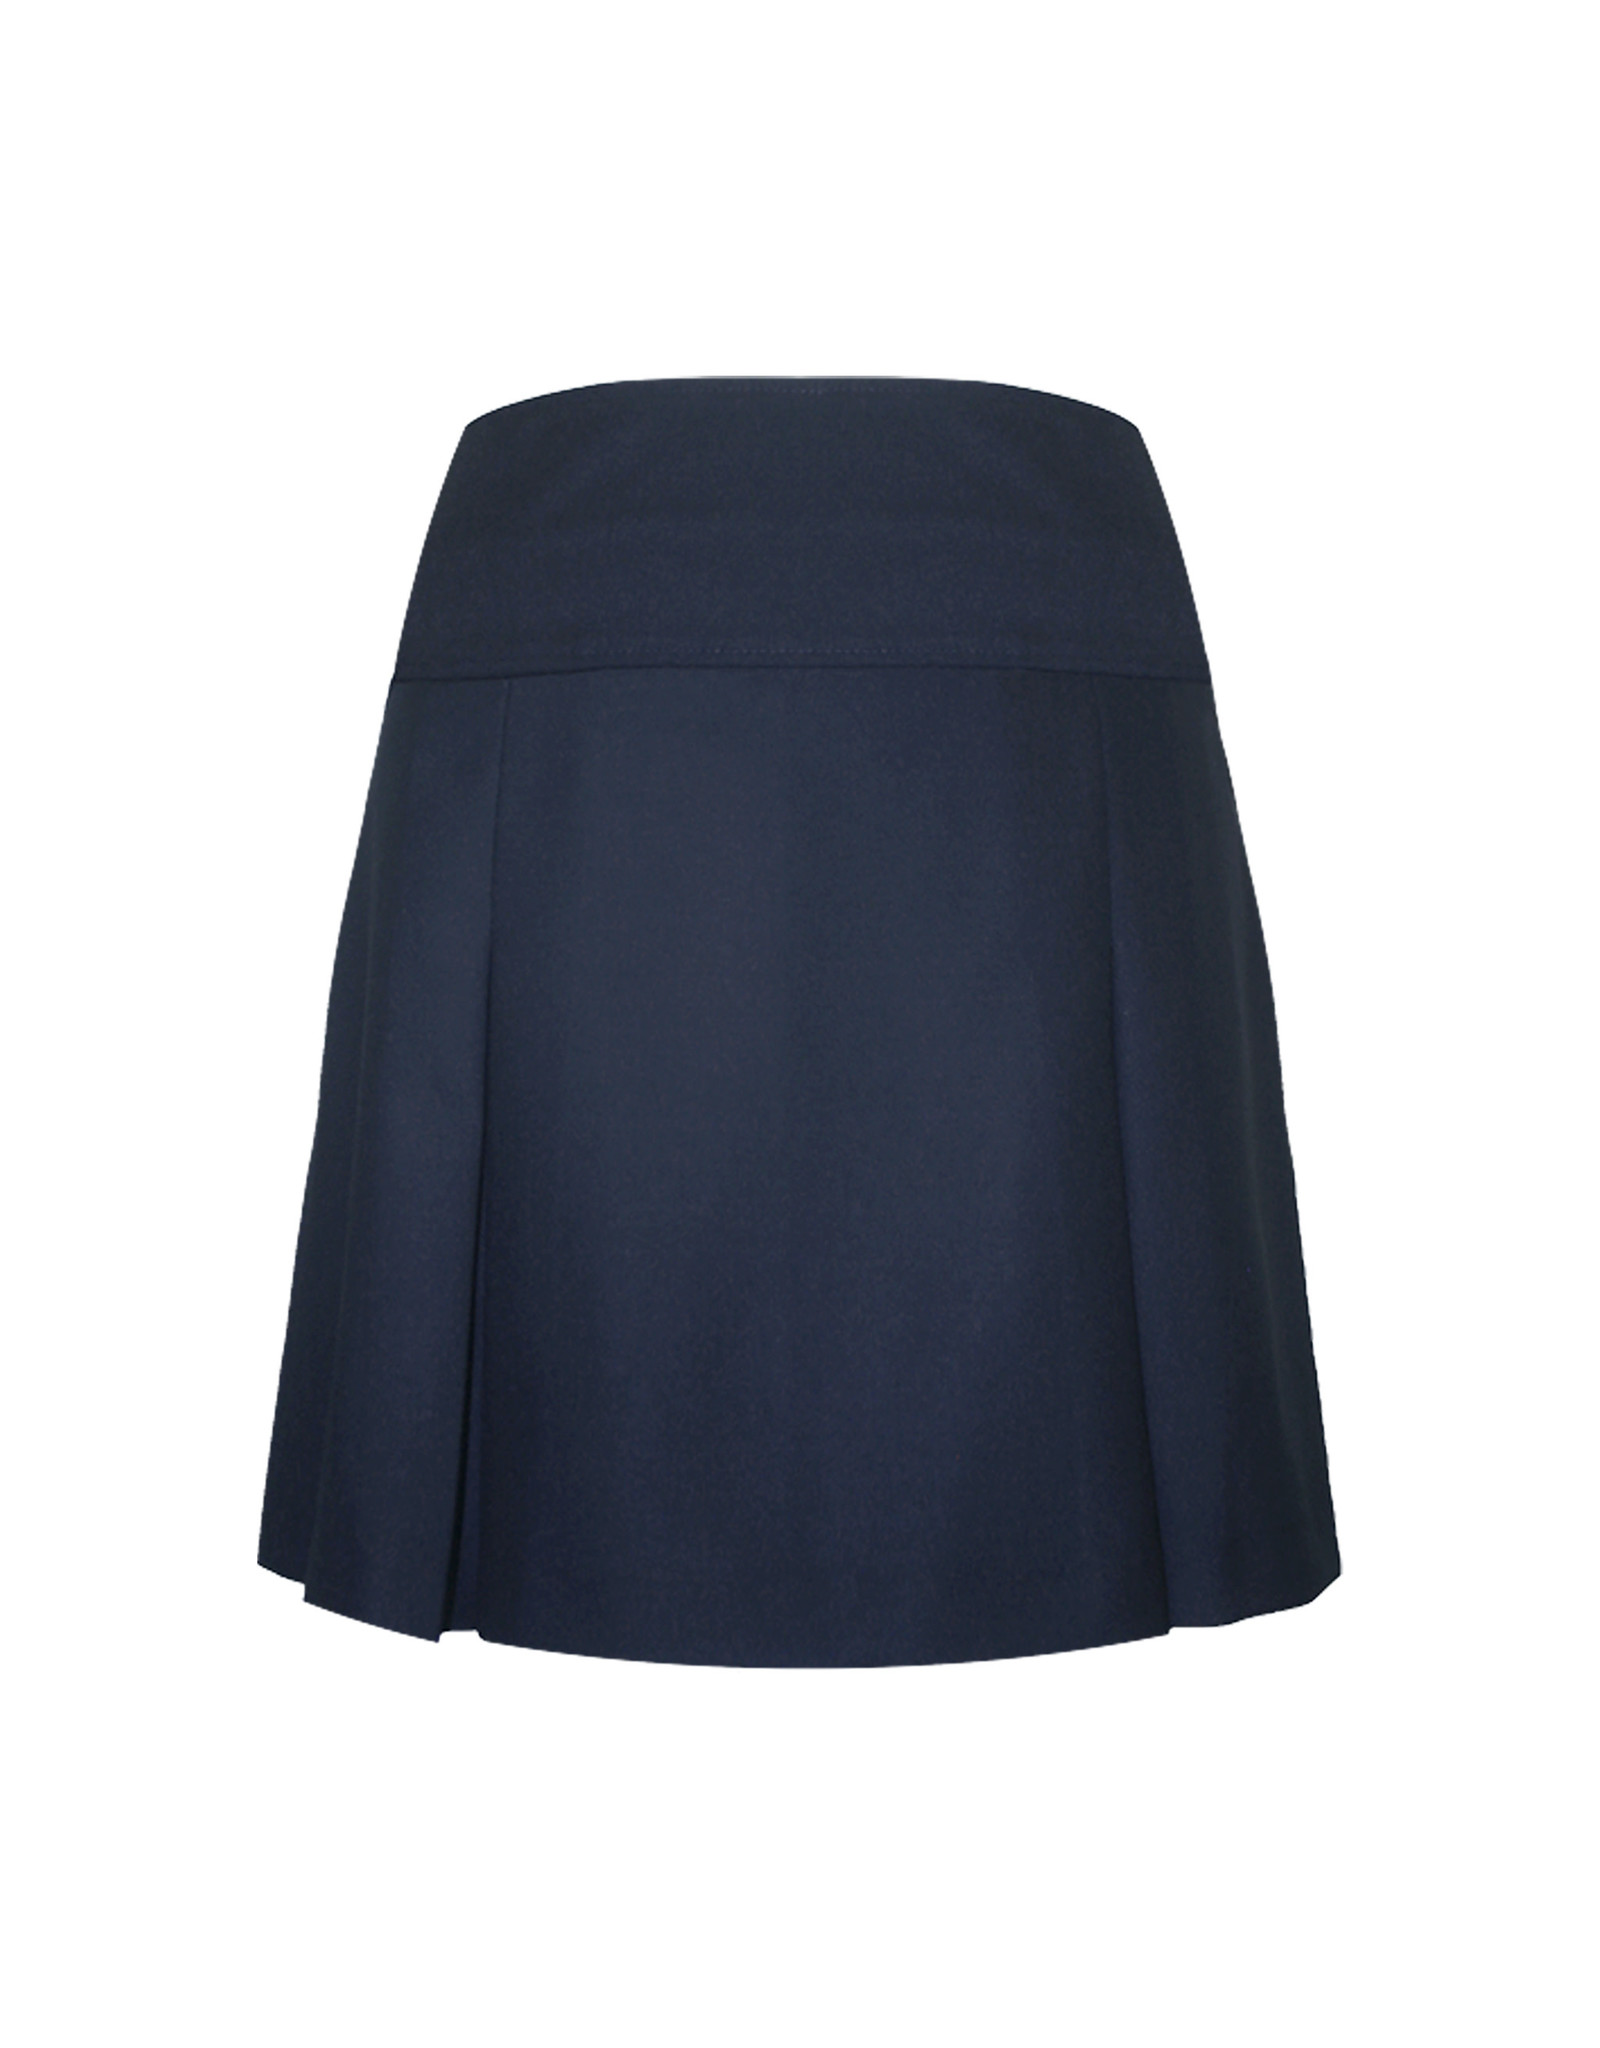 Cambridge Tennis Skirt - Navy